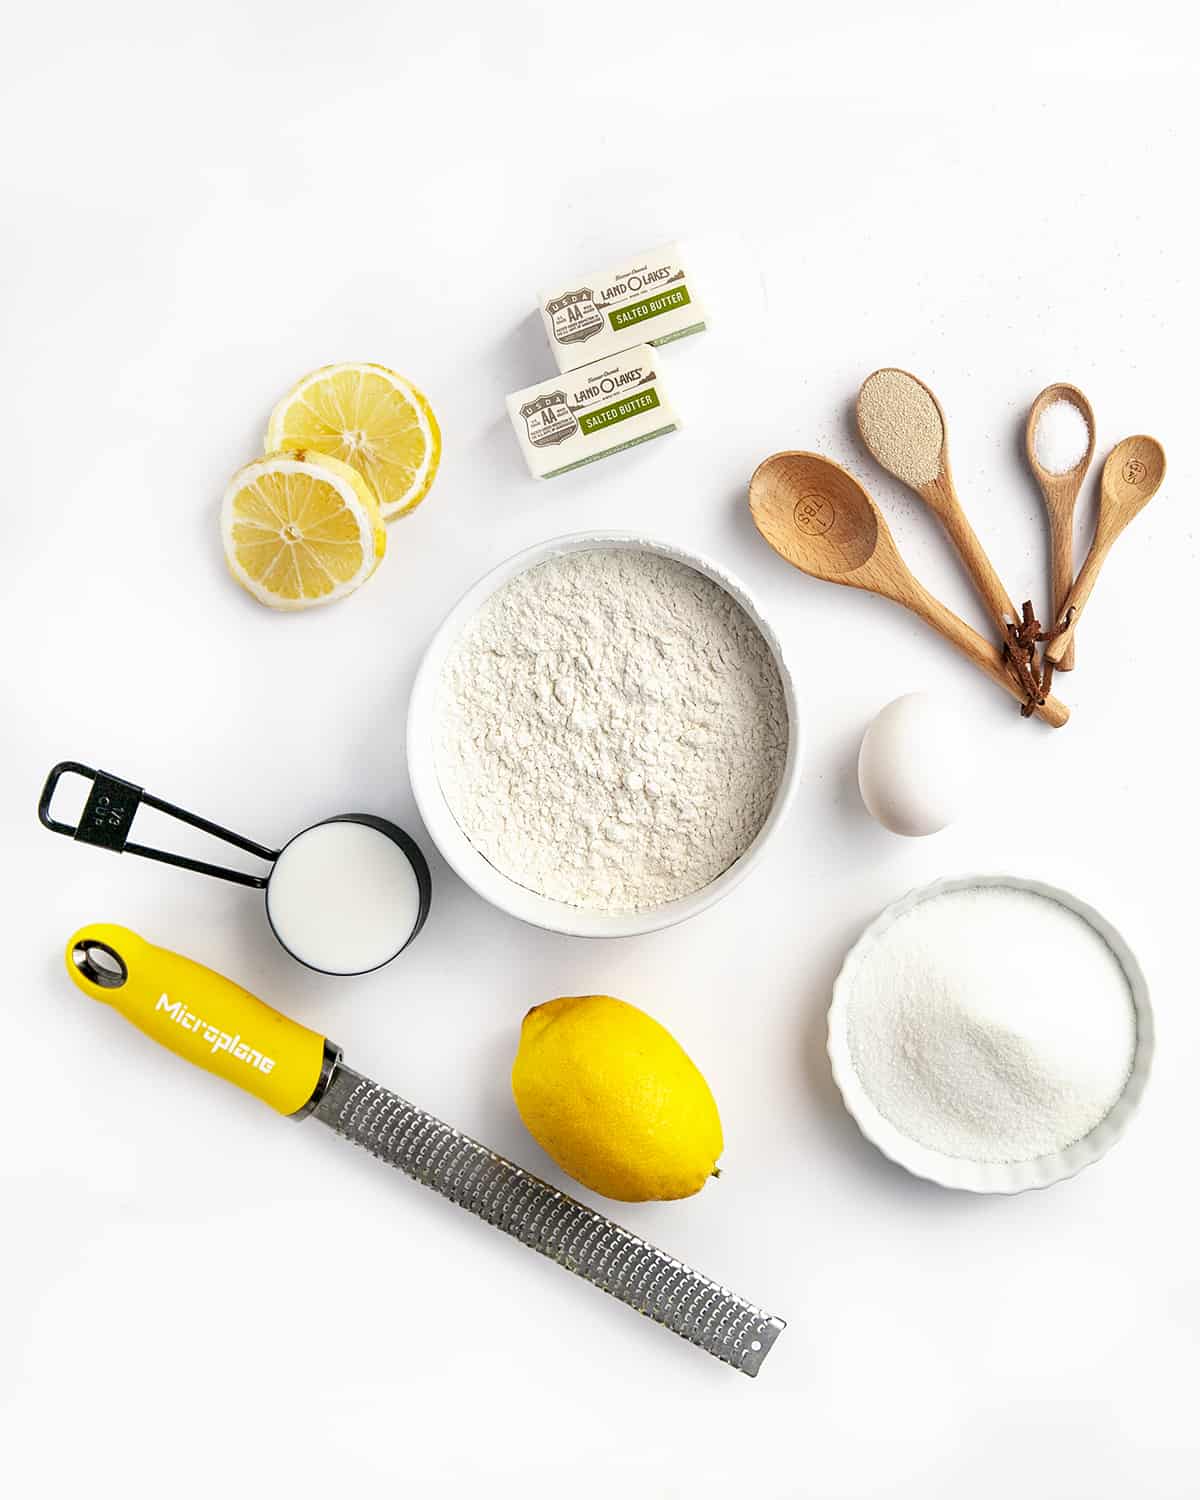 Ingredients for lemon sweet rolls. 